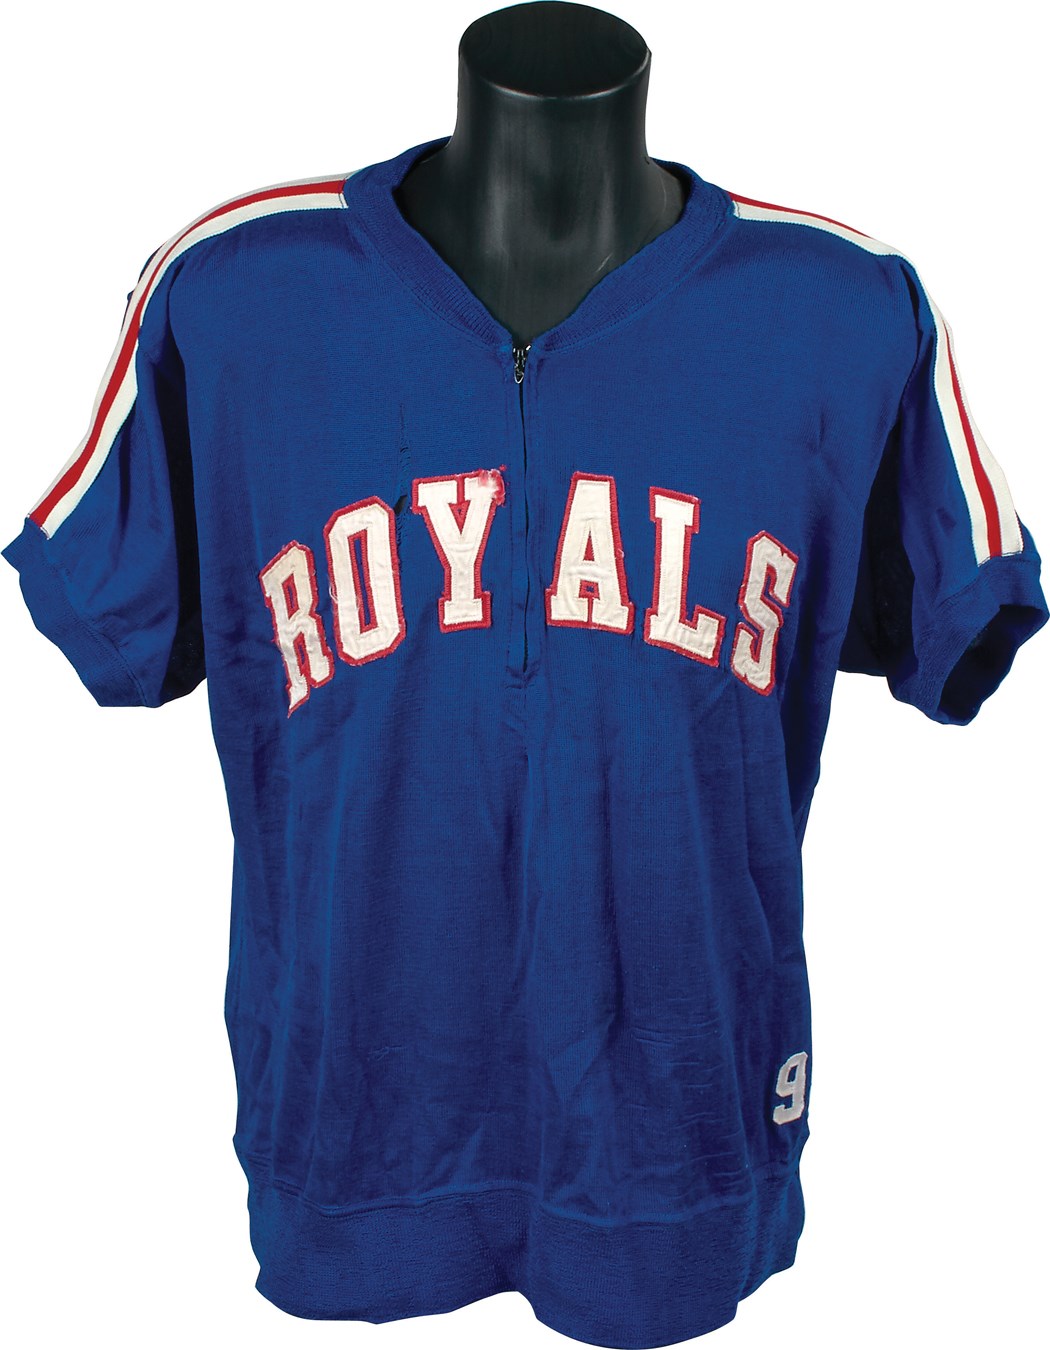 - Late 1960s Cincinnati Royals Shooting Shirt